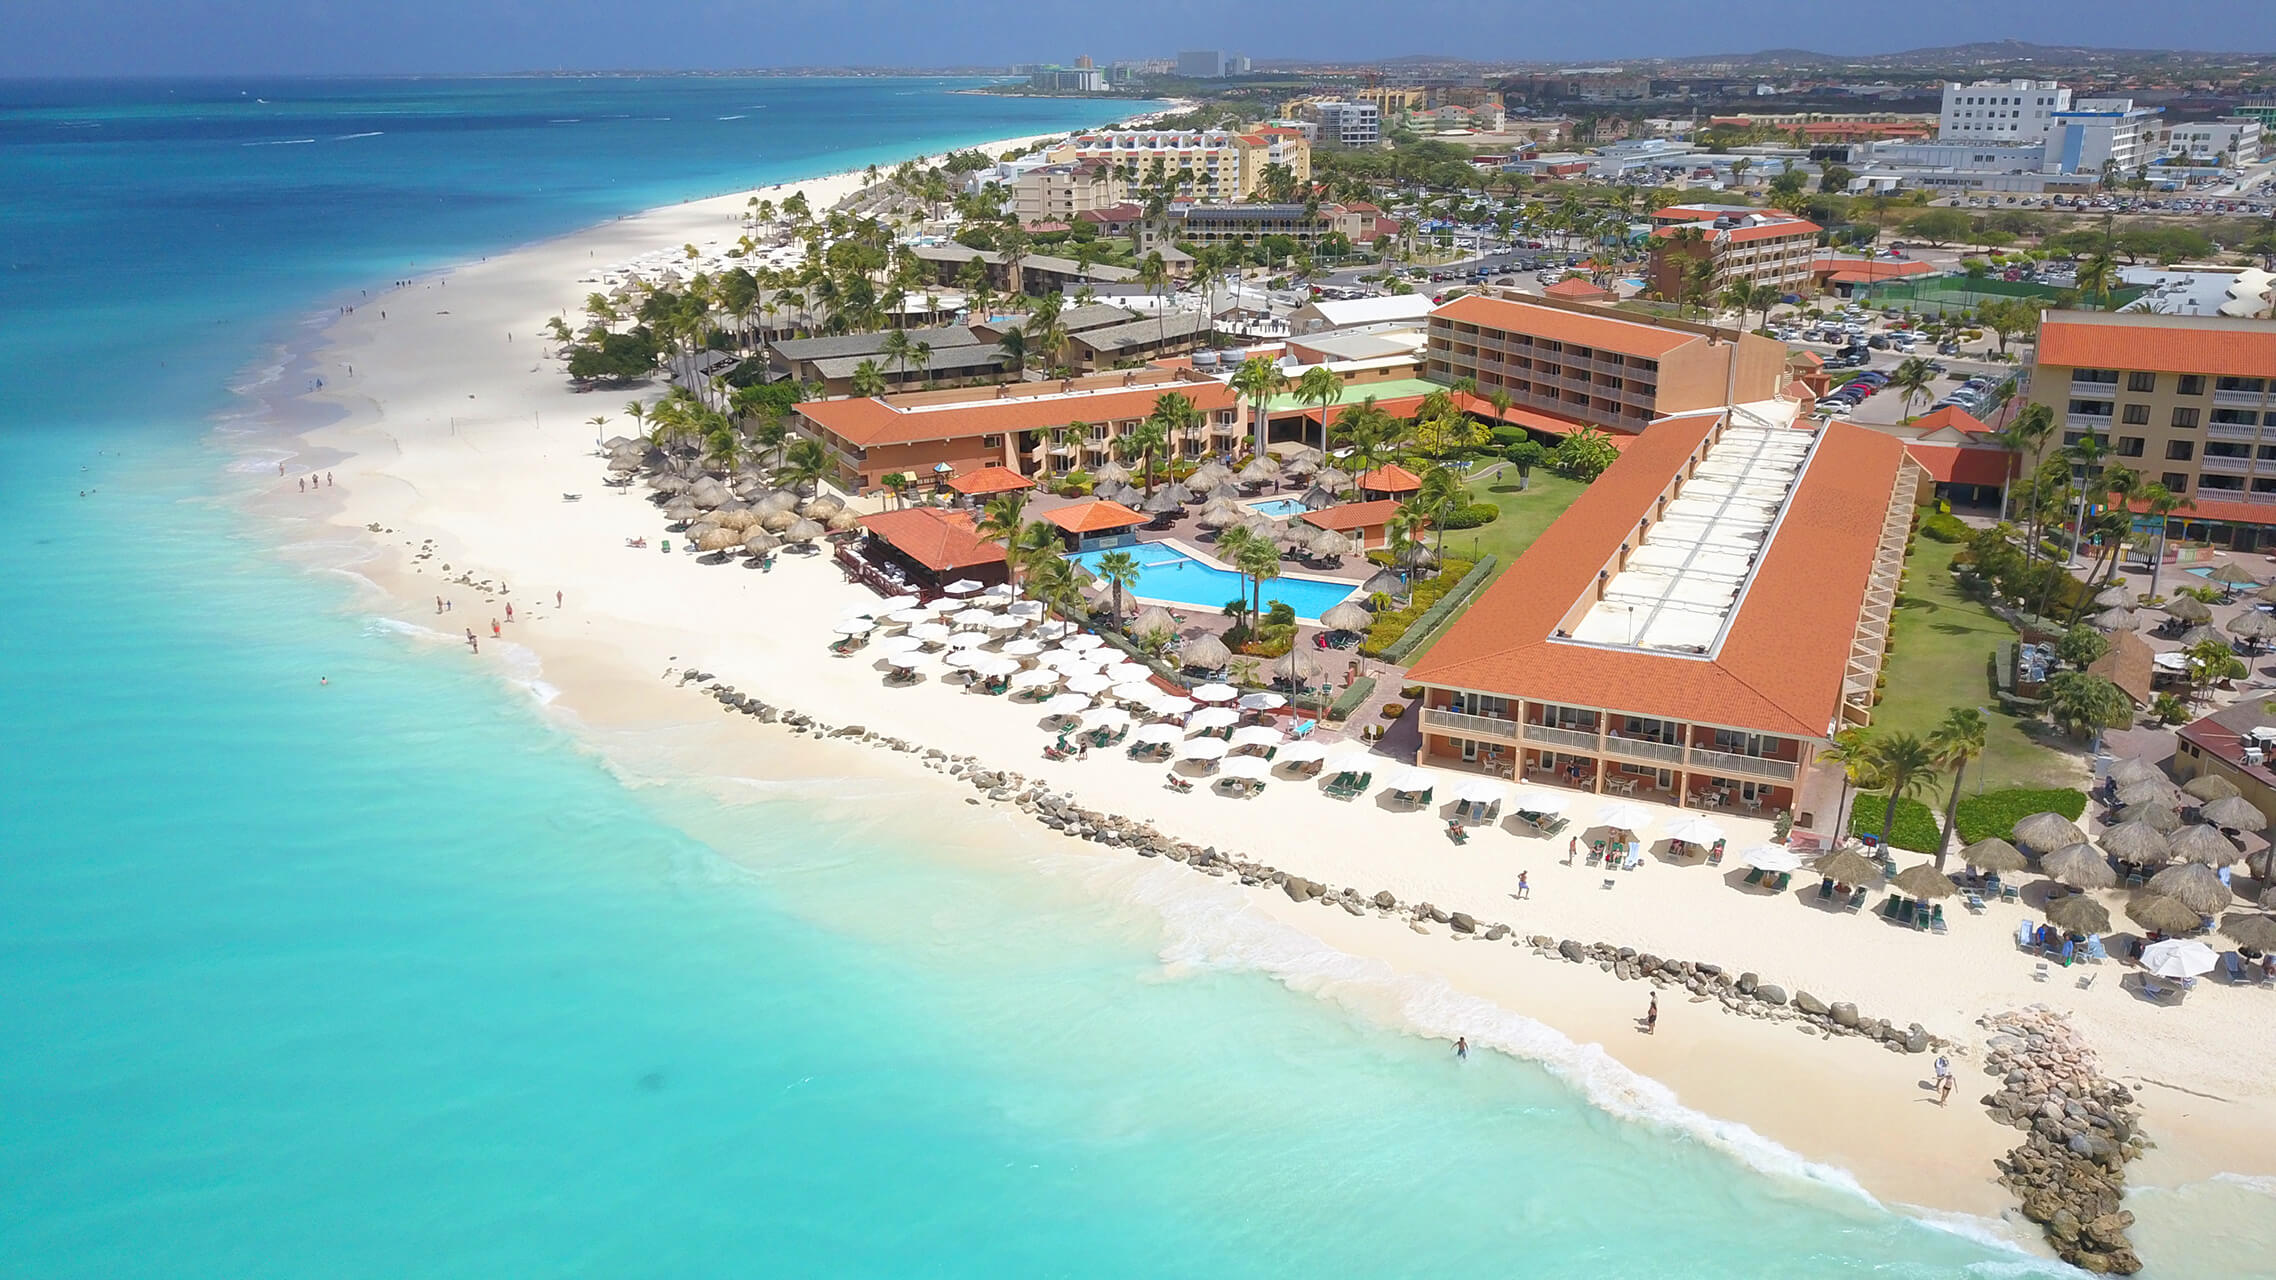 About Beach Club Resort Amenities The Aruba Beach Club Resort